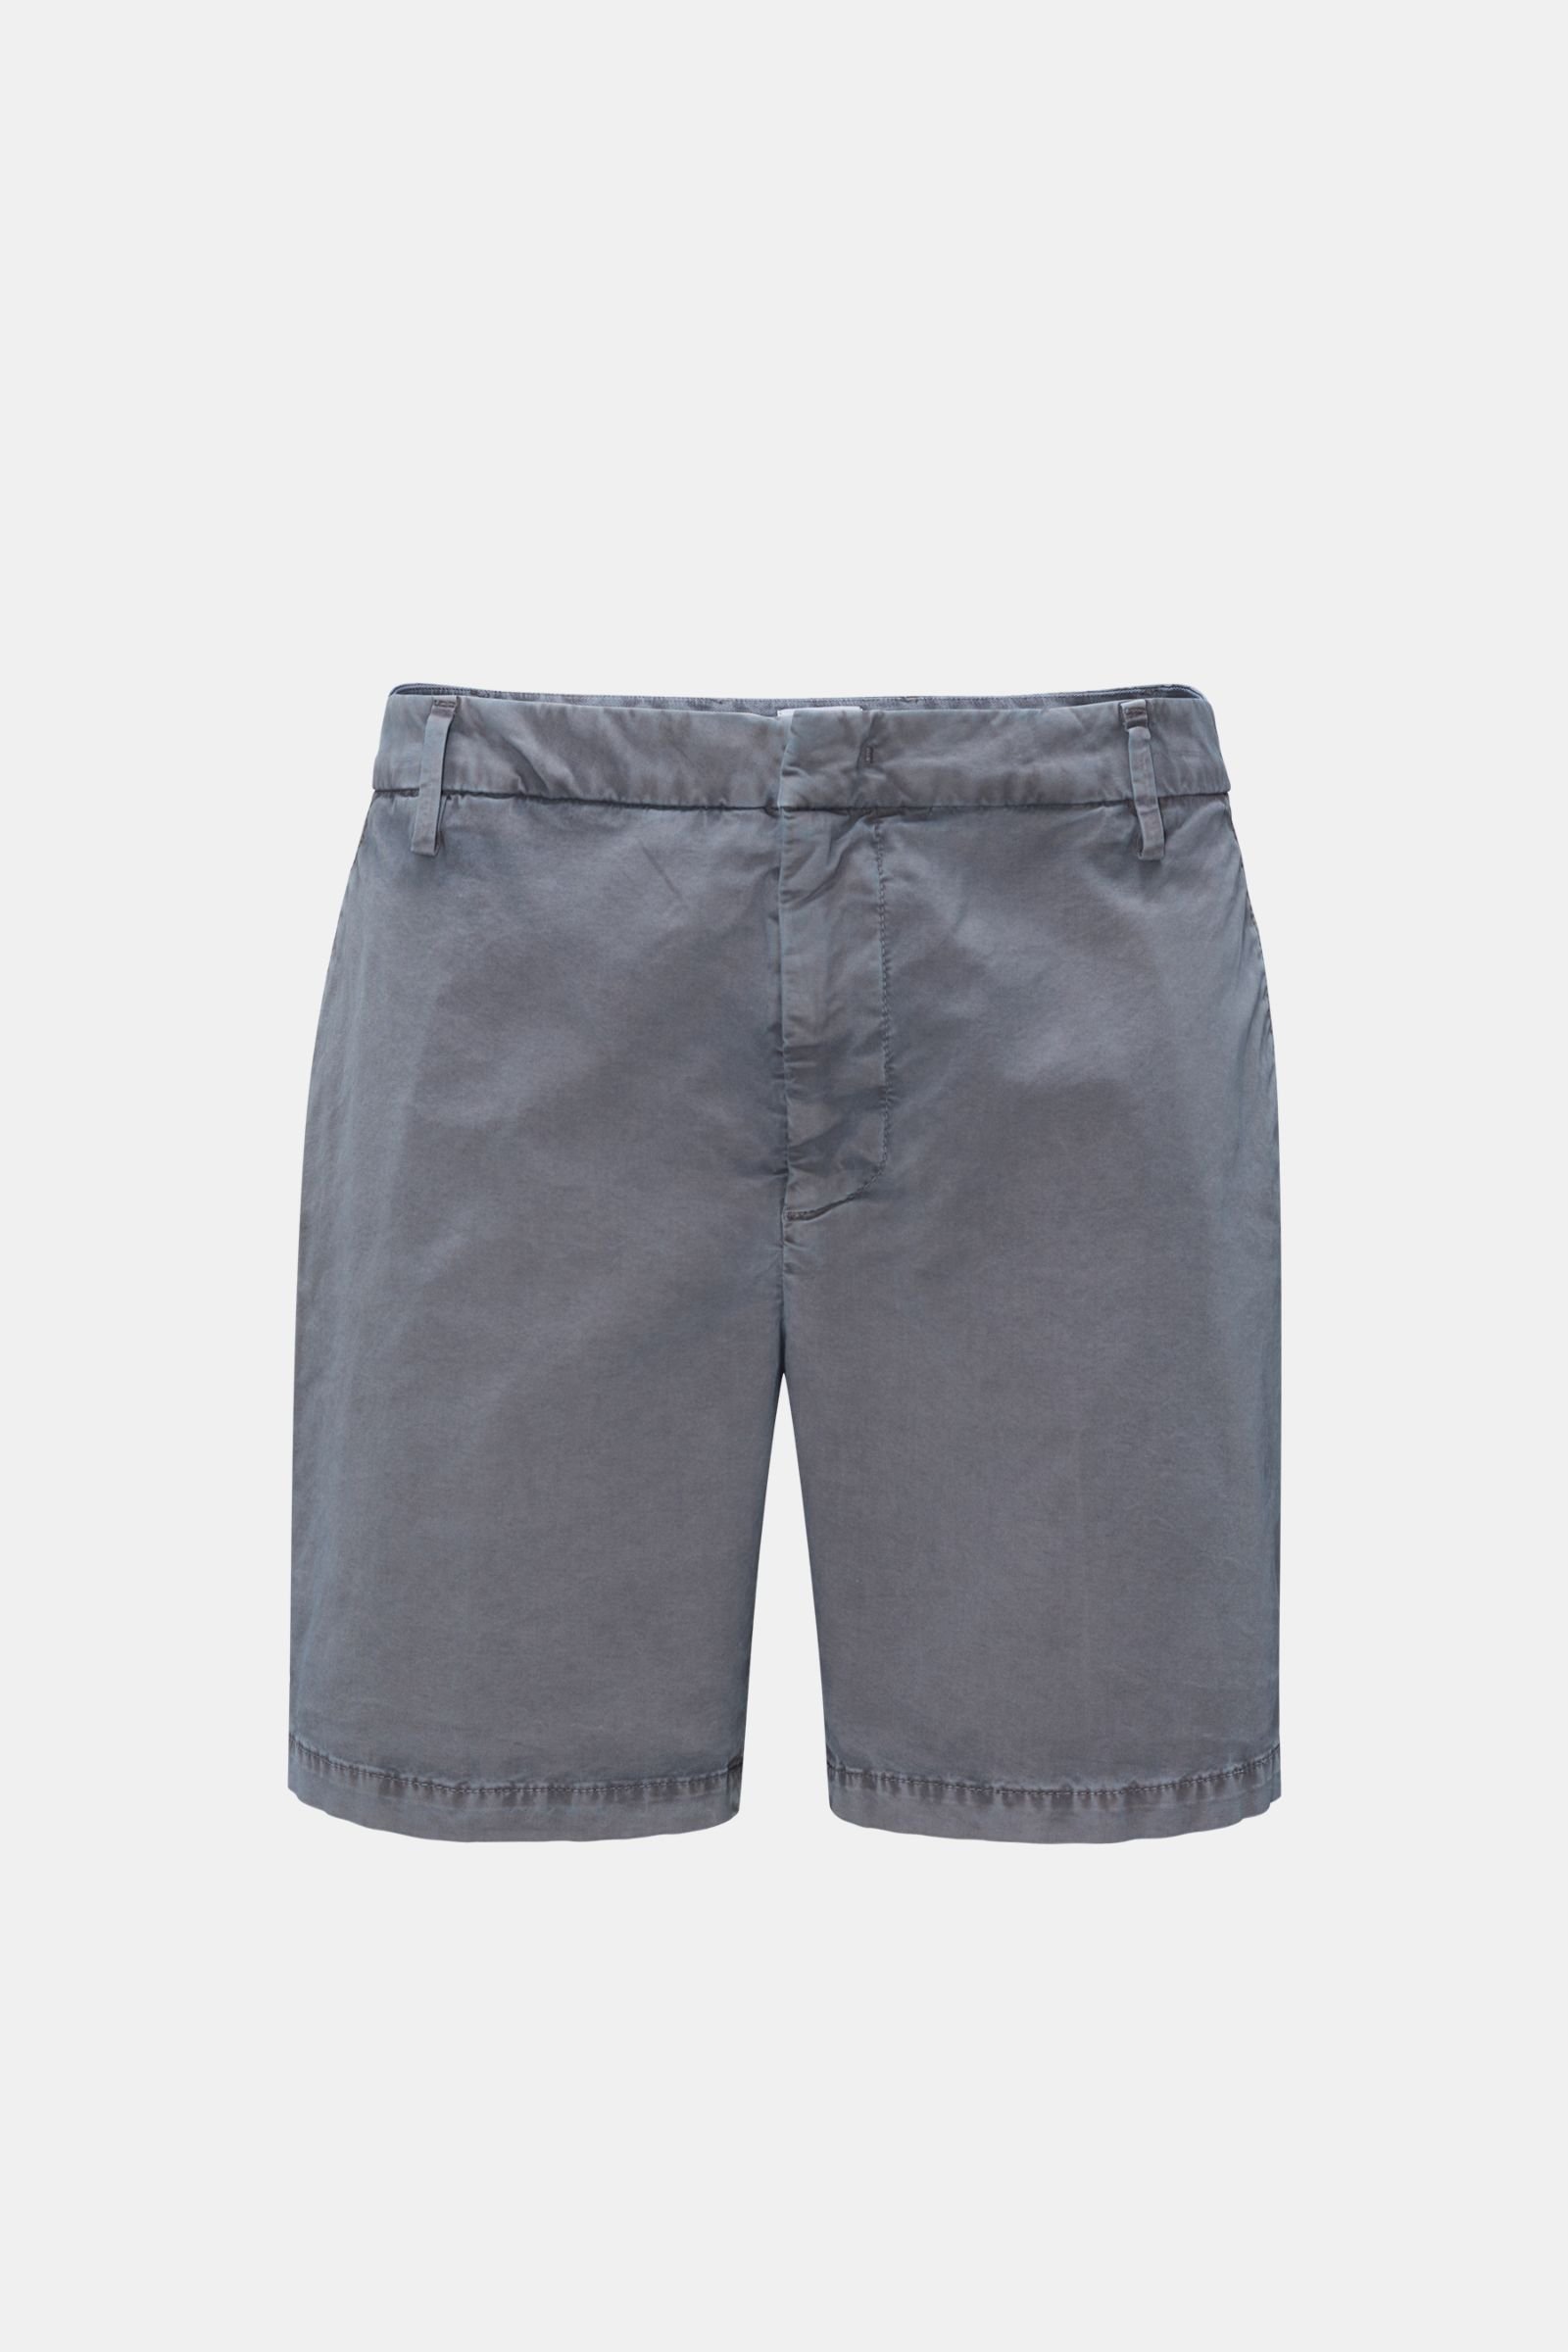 Shorts 'Manheim' grey-blue